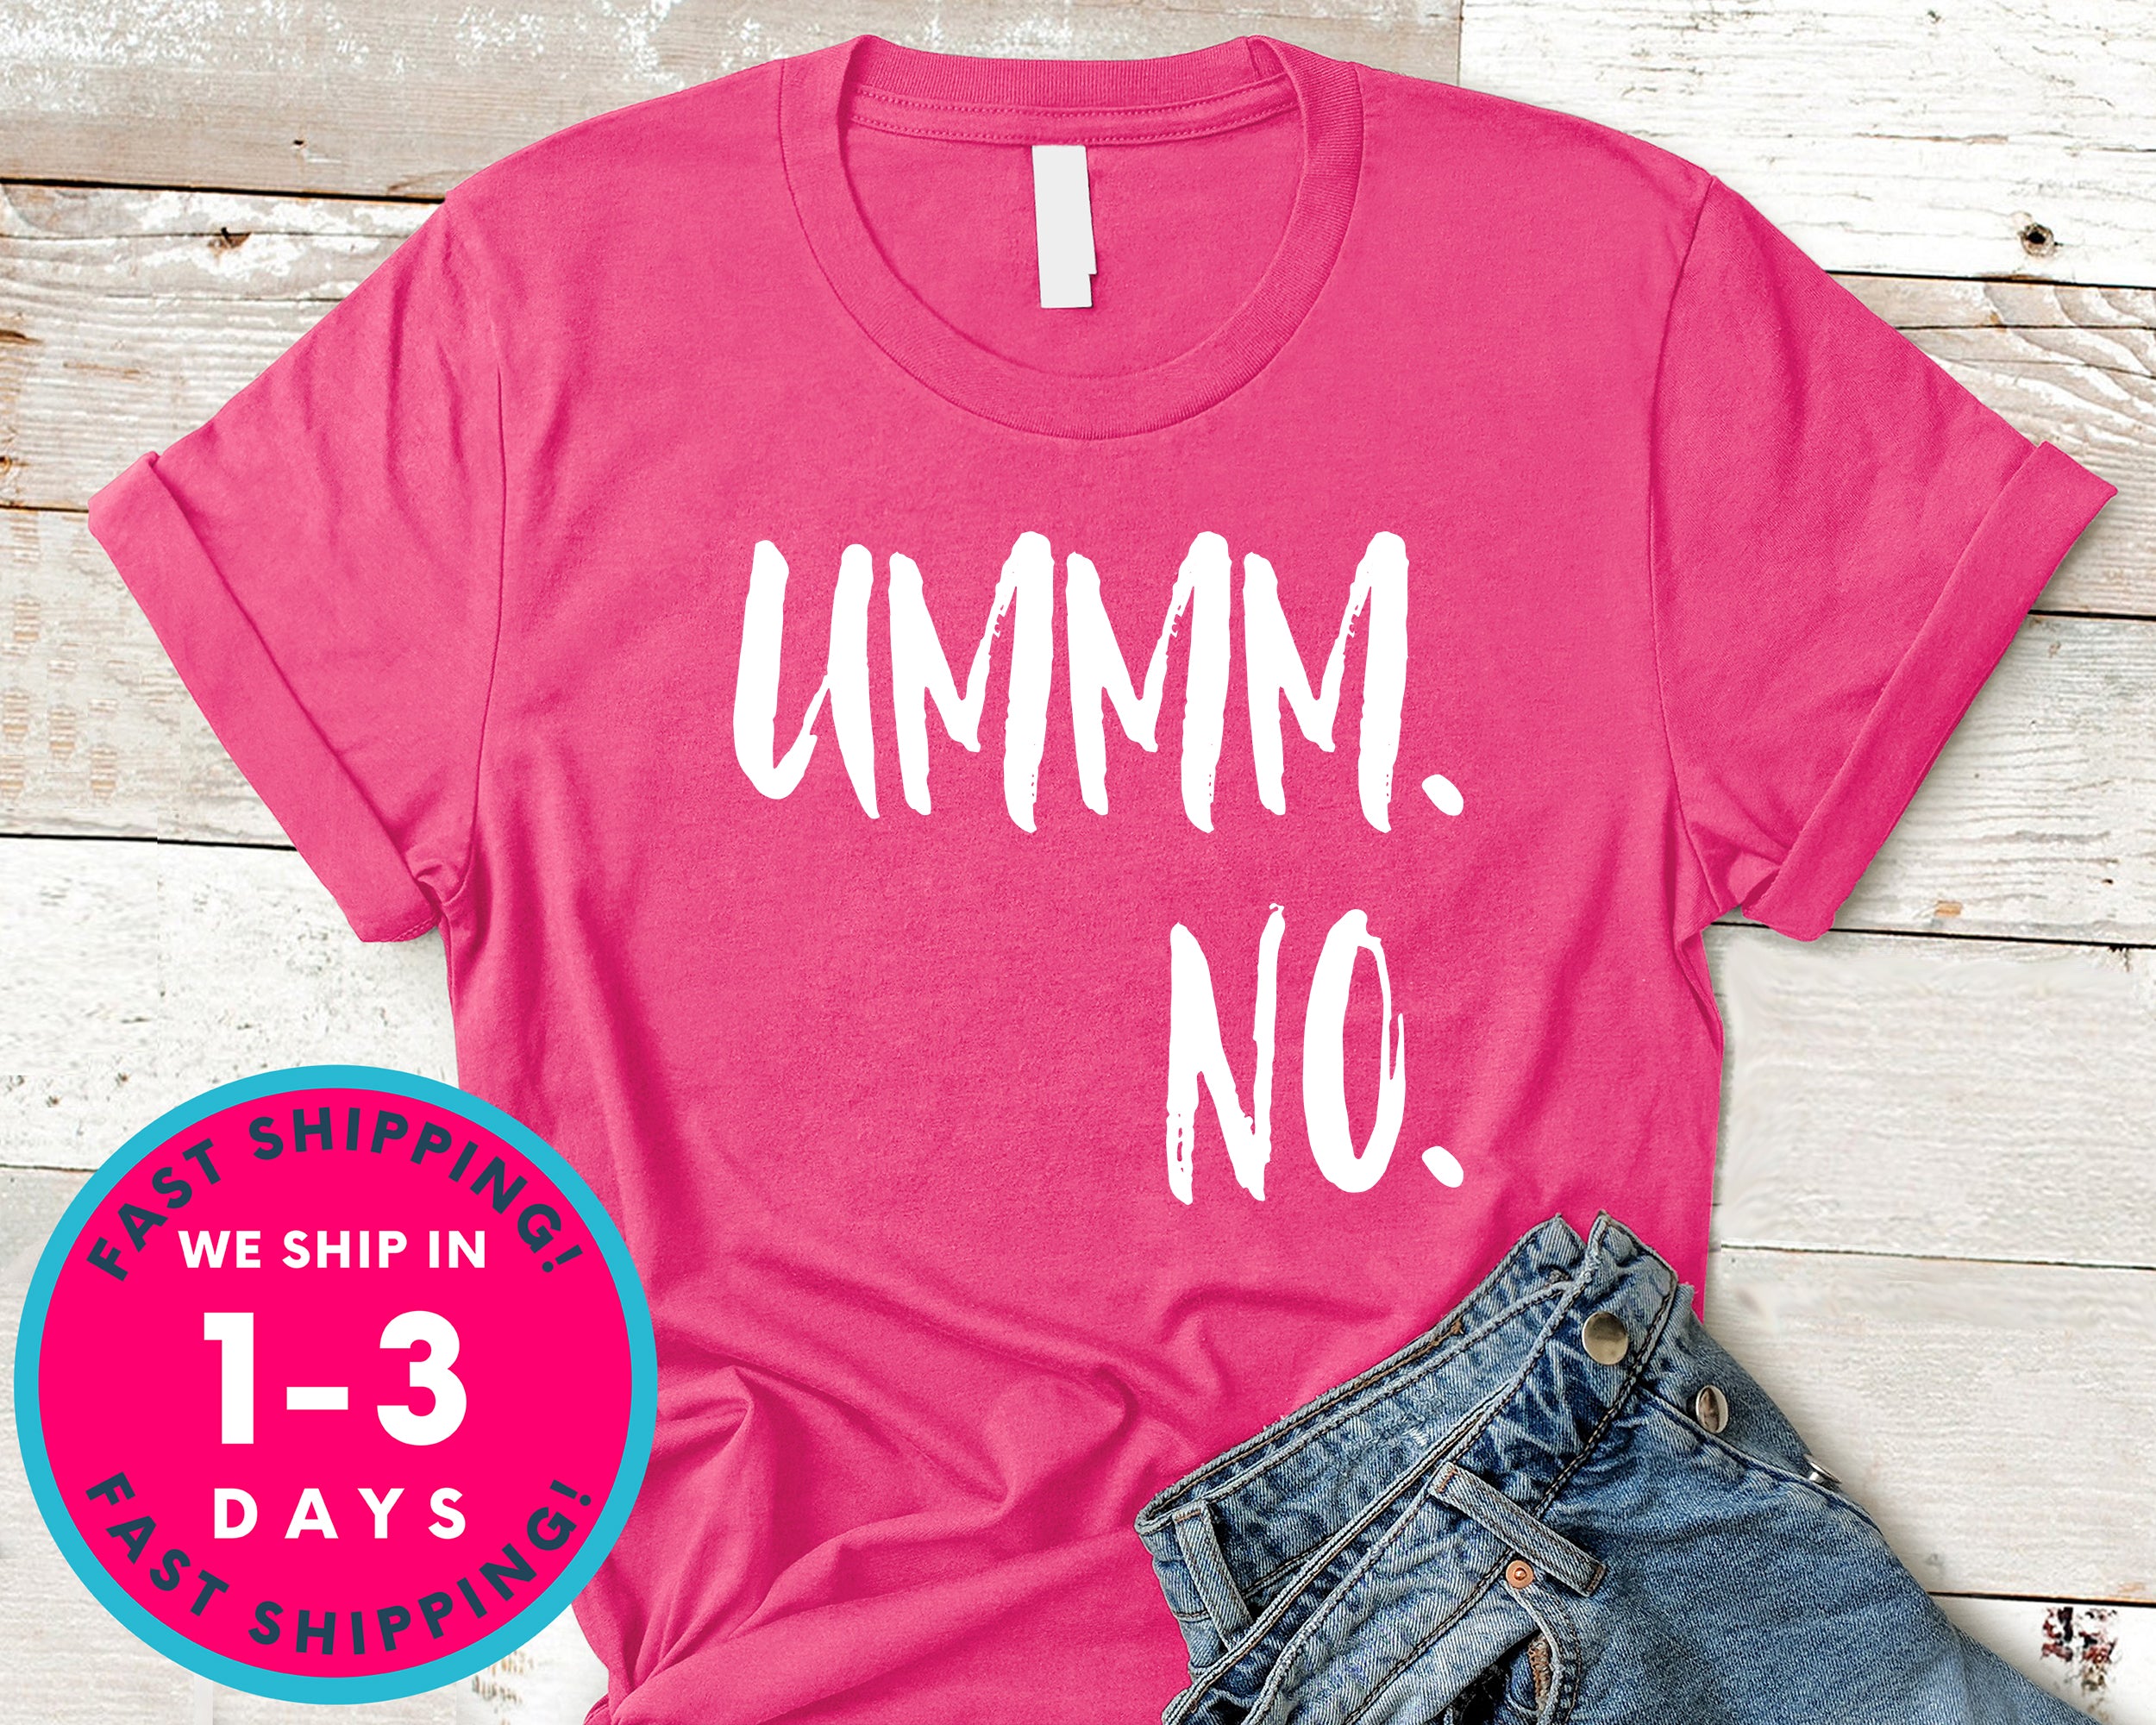 Women's Ummm No T-Shirt - Funny Humor Shirt